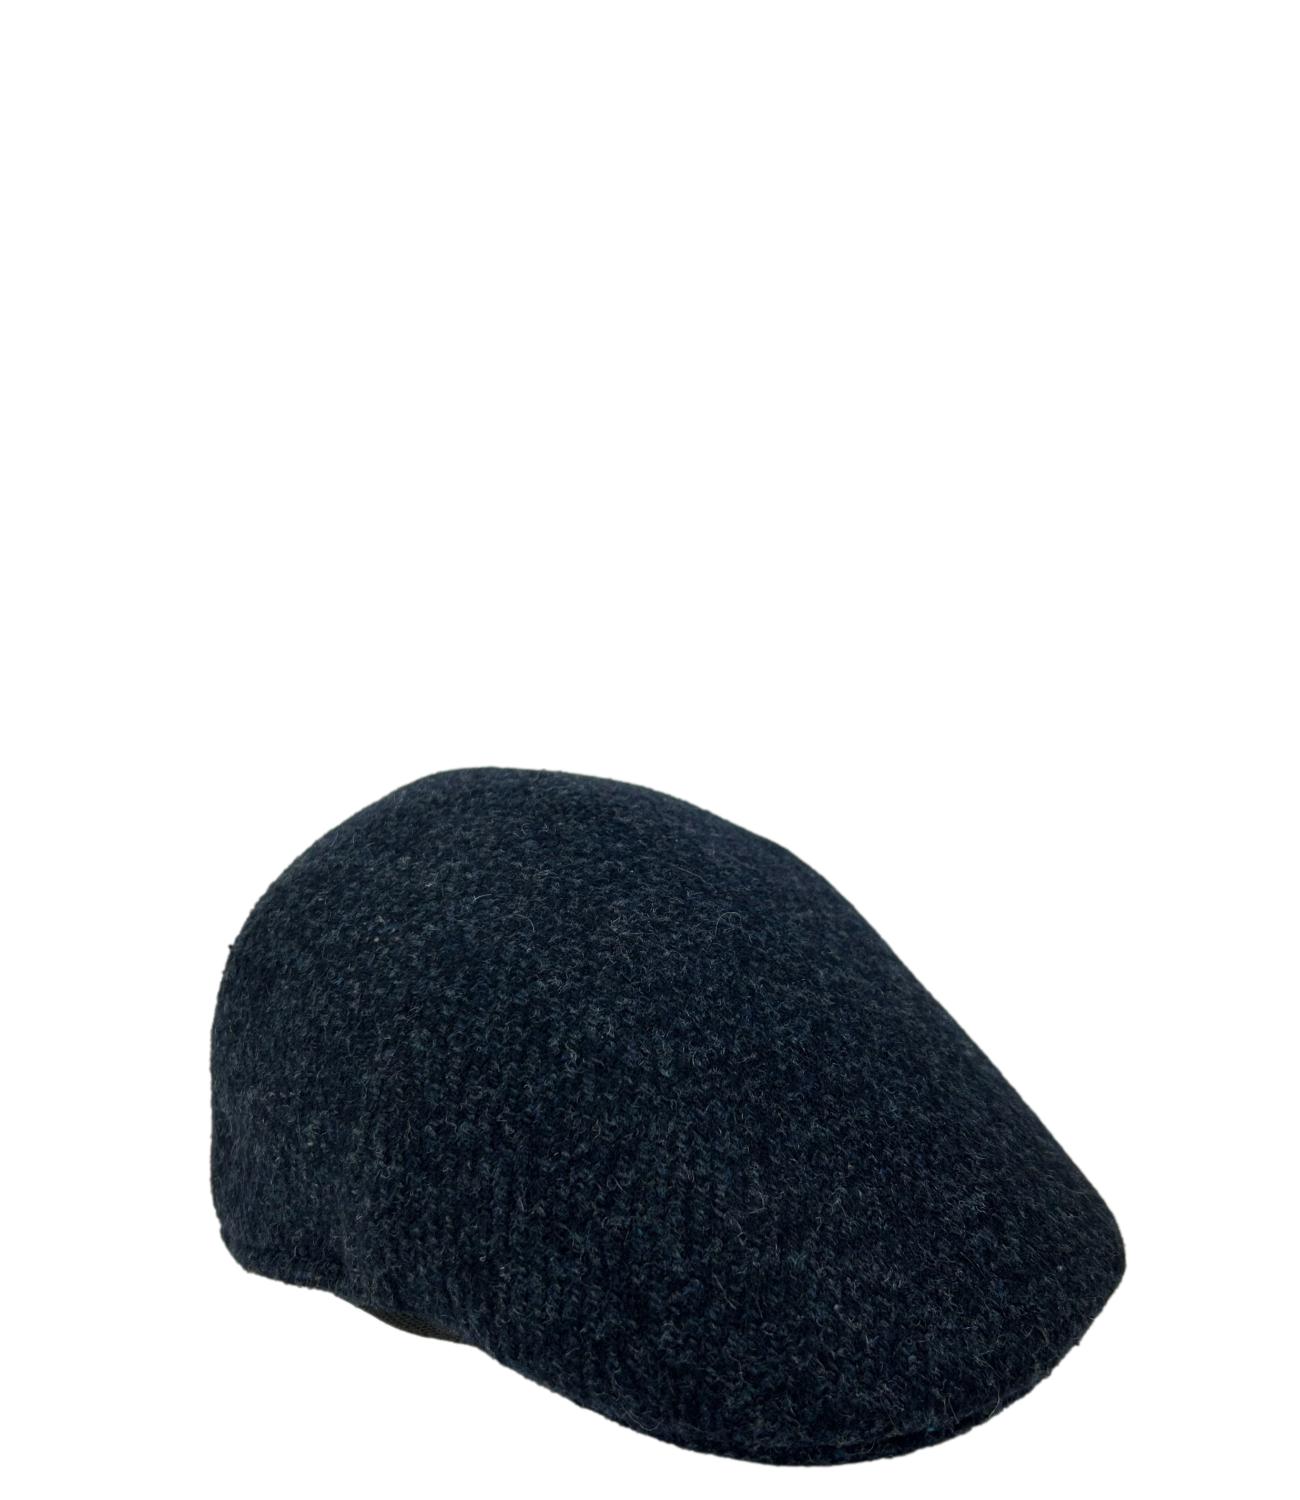 Men's stick cap in blue wool